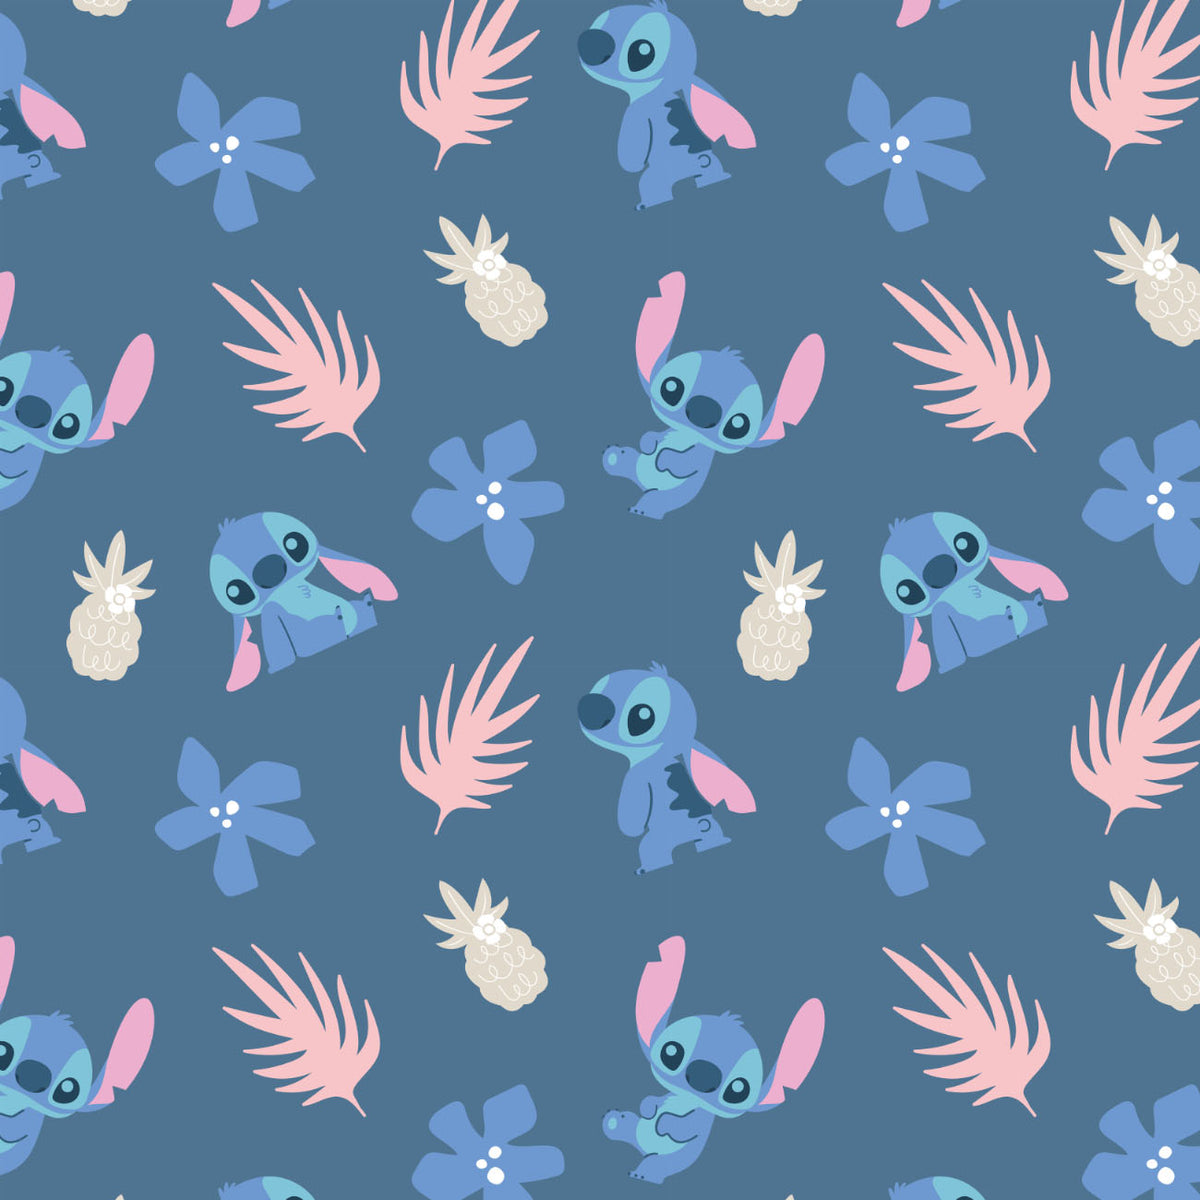 100+] Kawaii Stitch Wallpapers